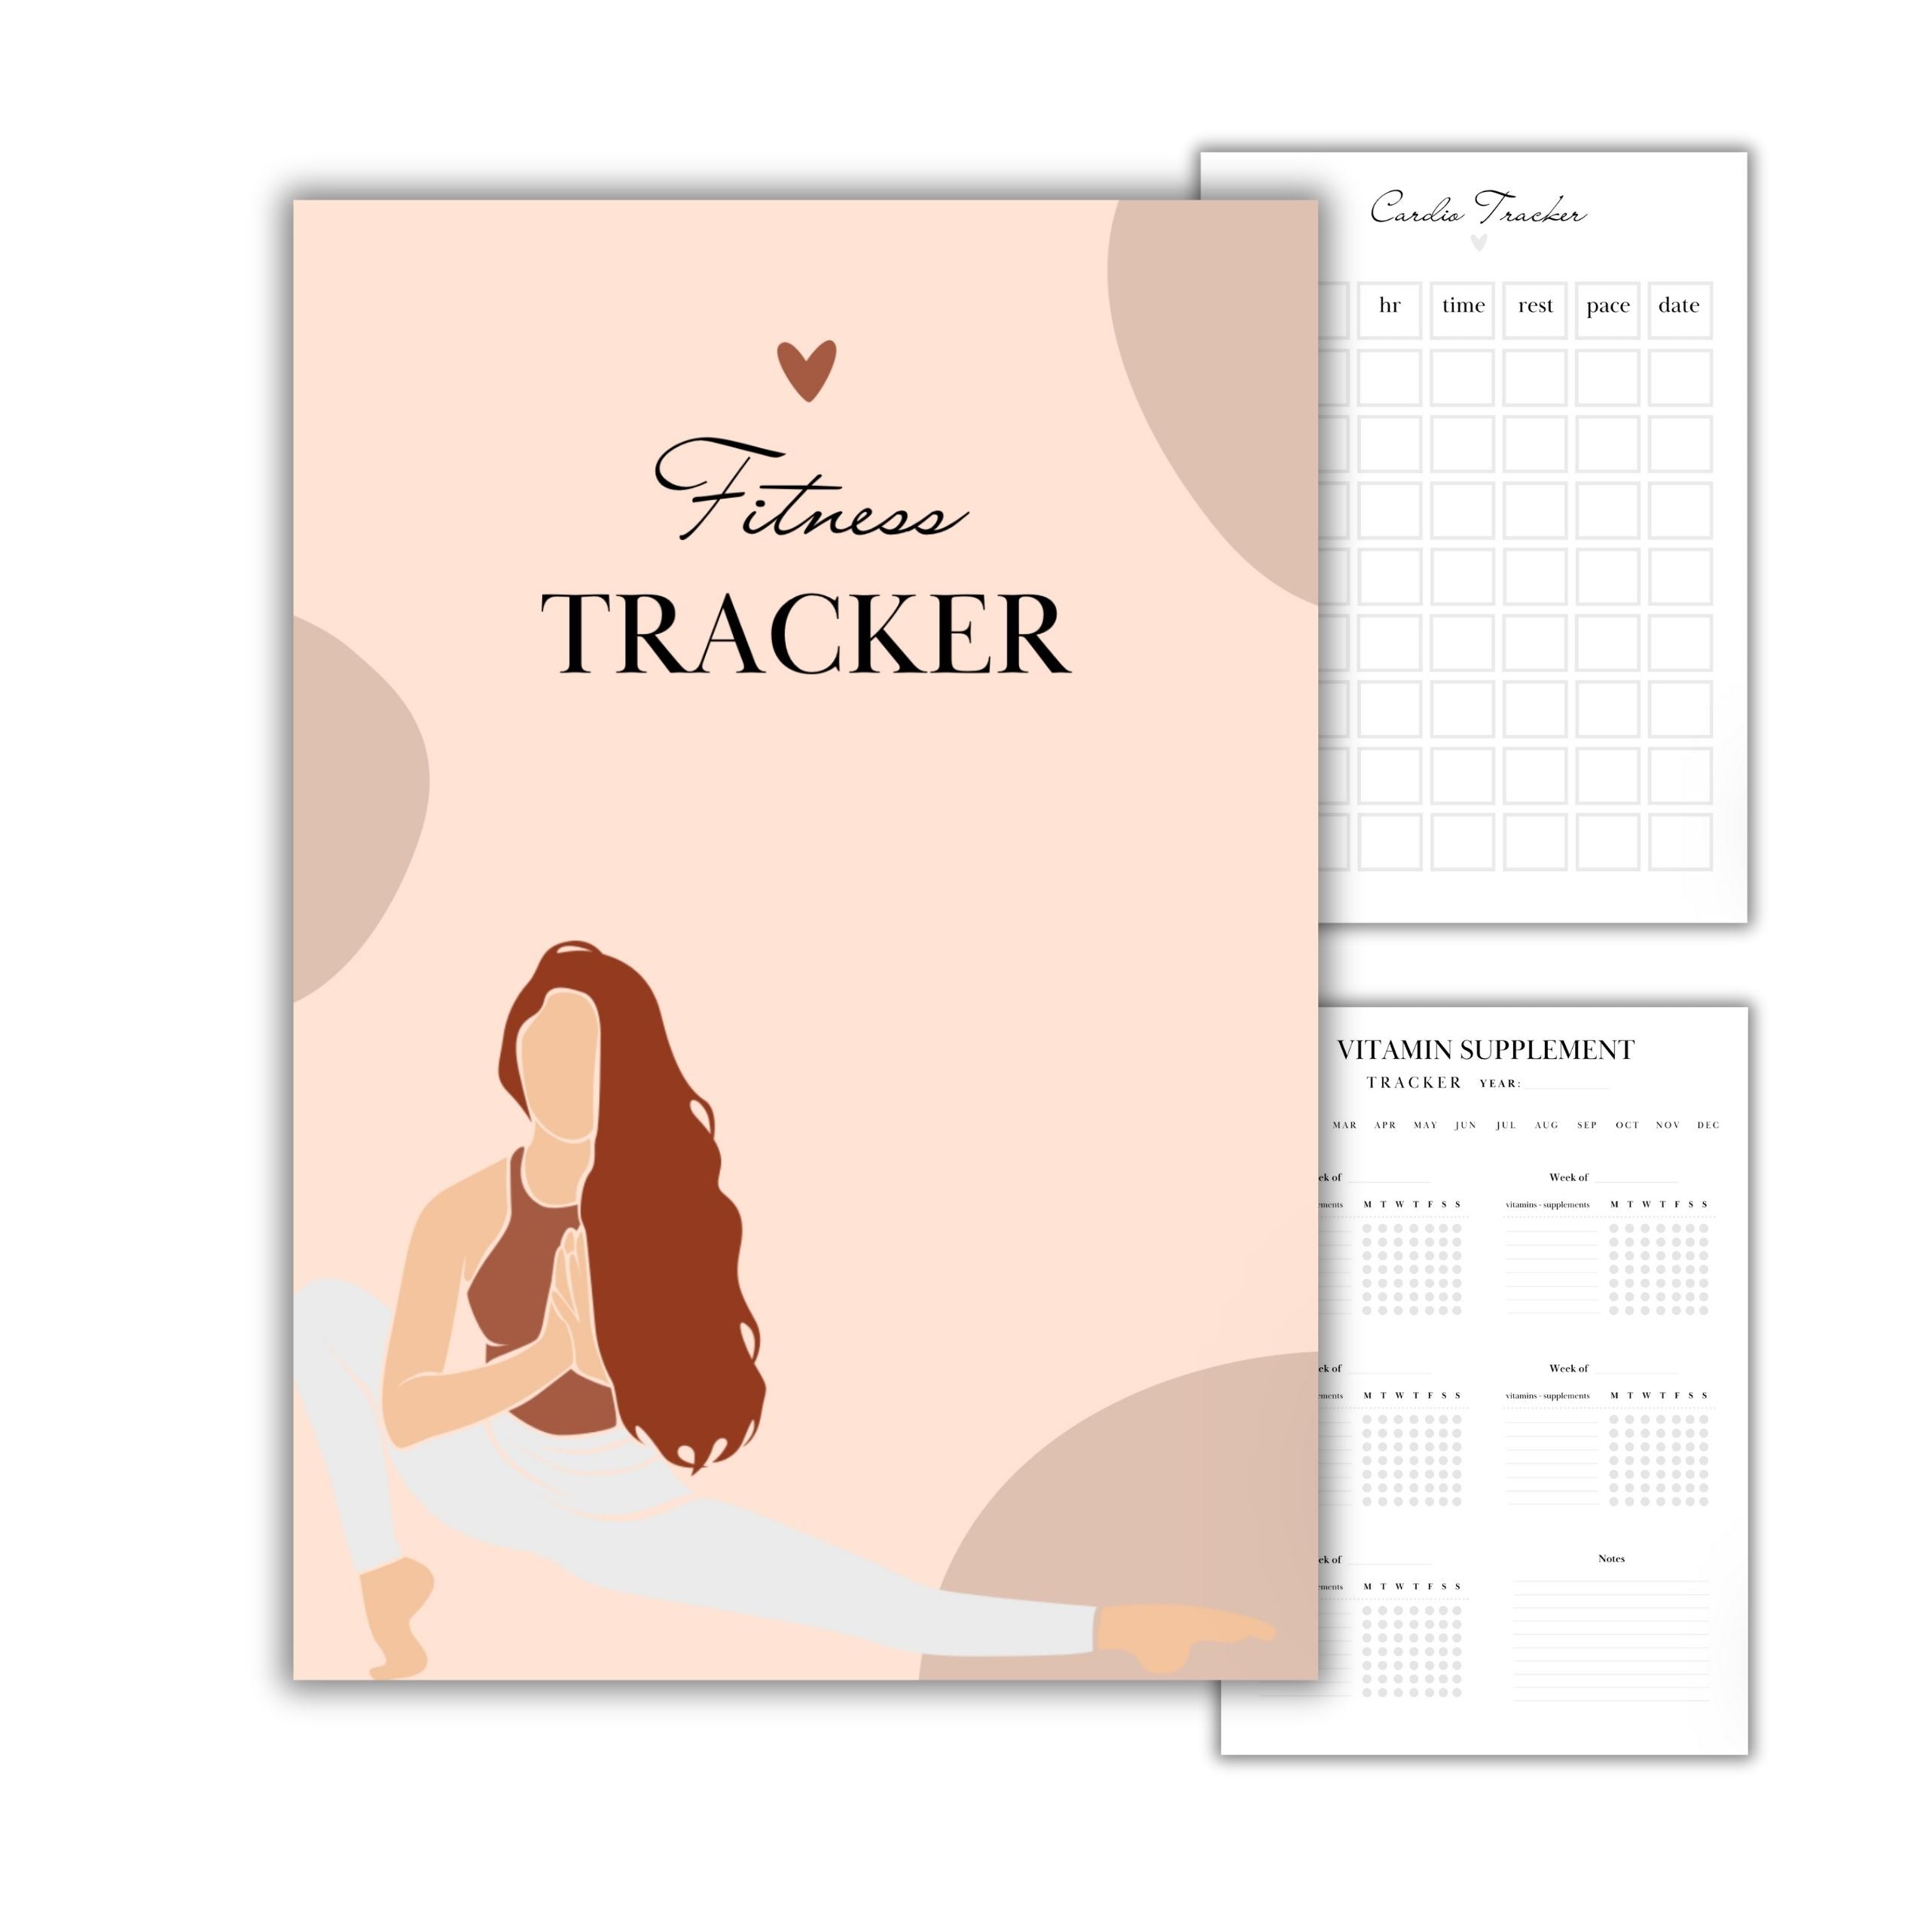 Fitness Tracker Booklet Digital Download